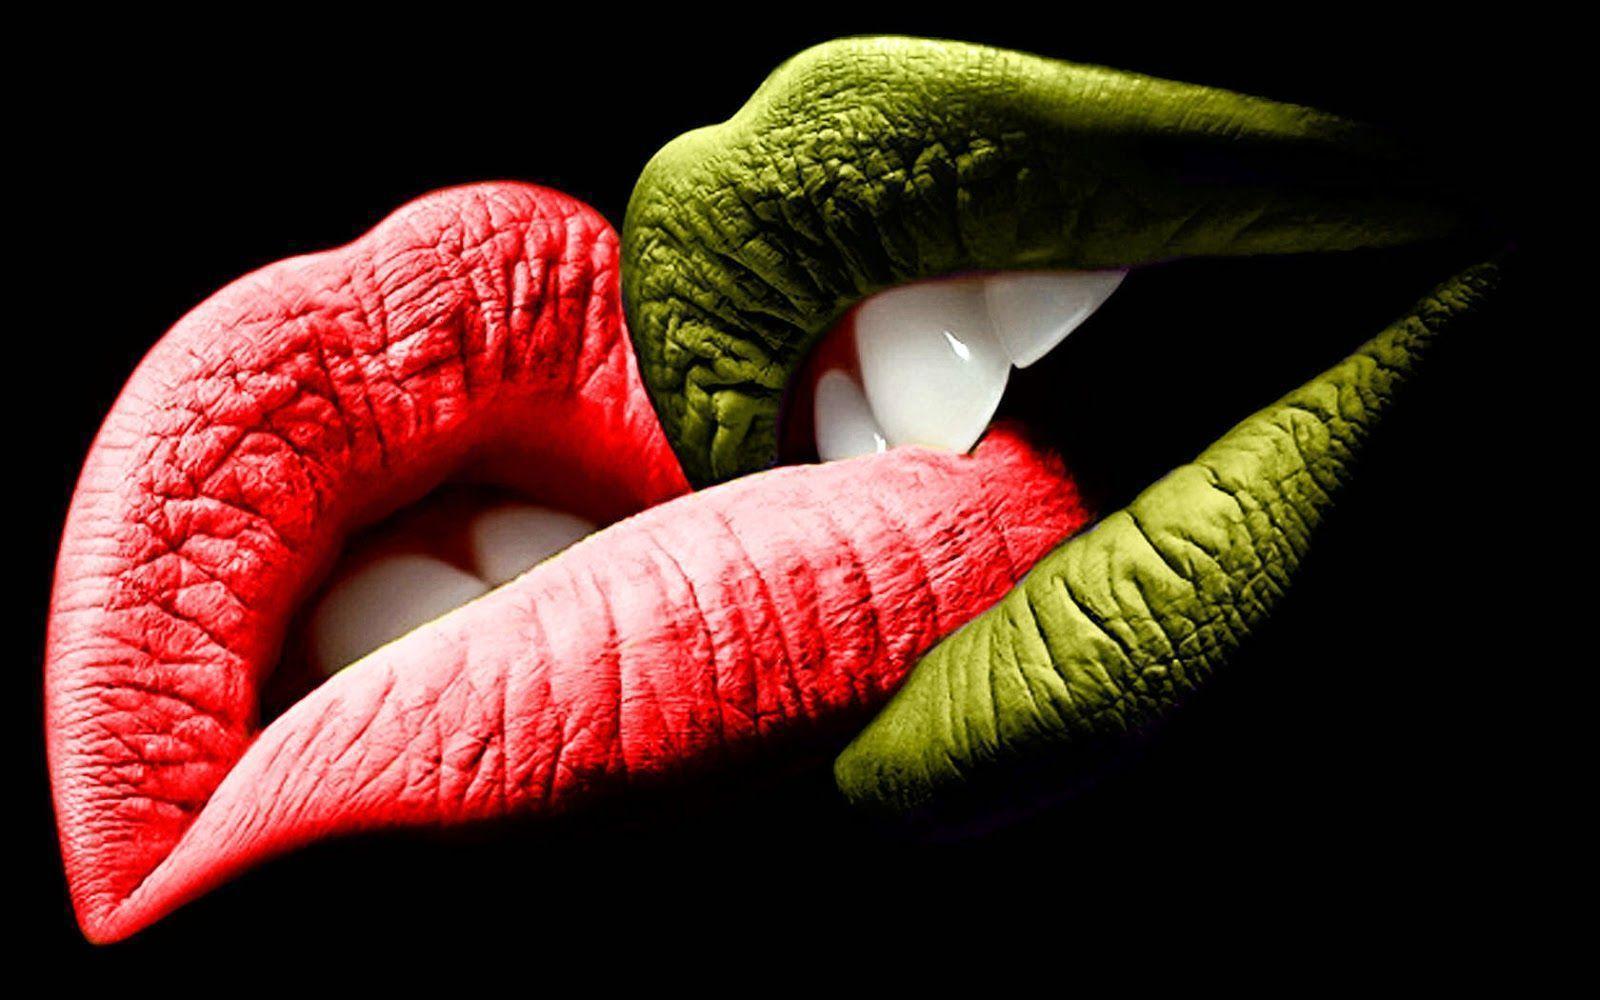 New*}Hot Happy Kiss Day Desktop Wallpaper KISS DAY 2016. Happy